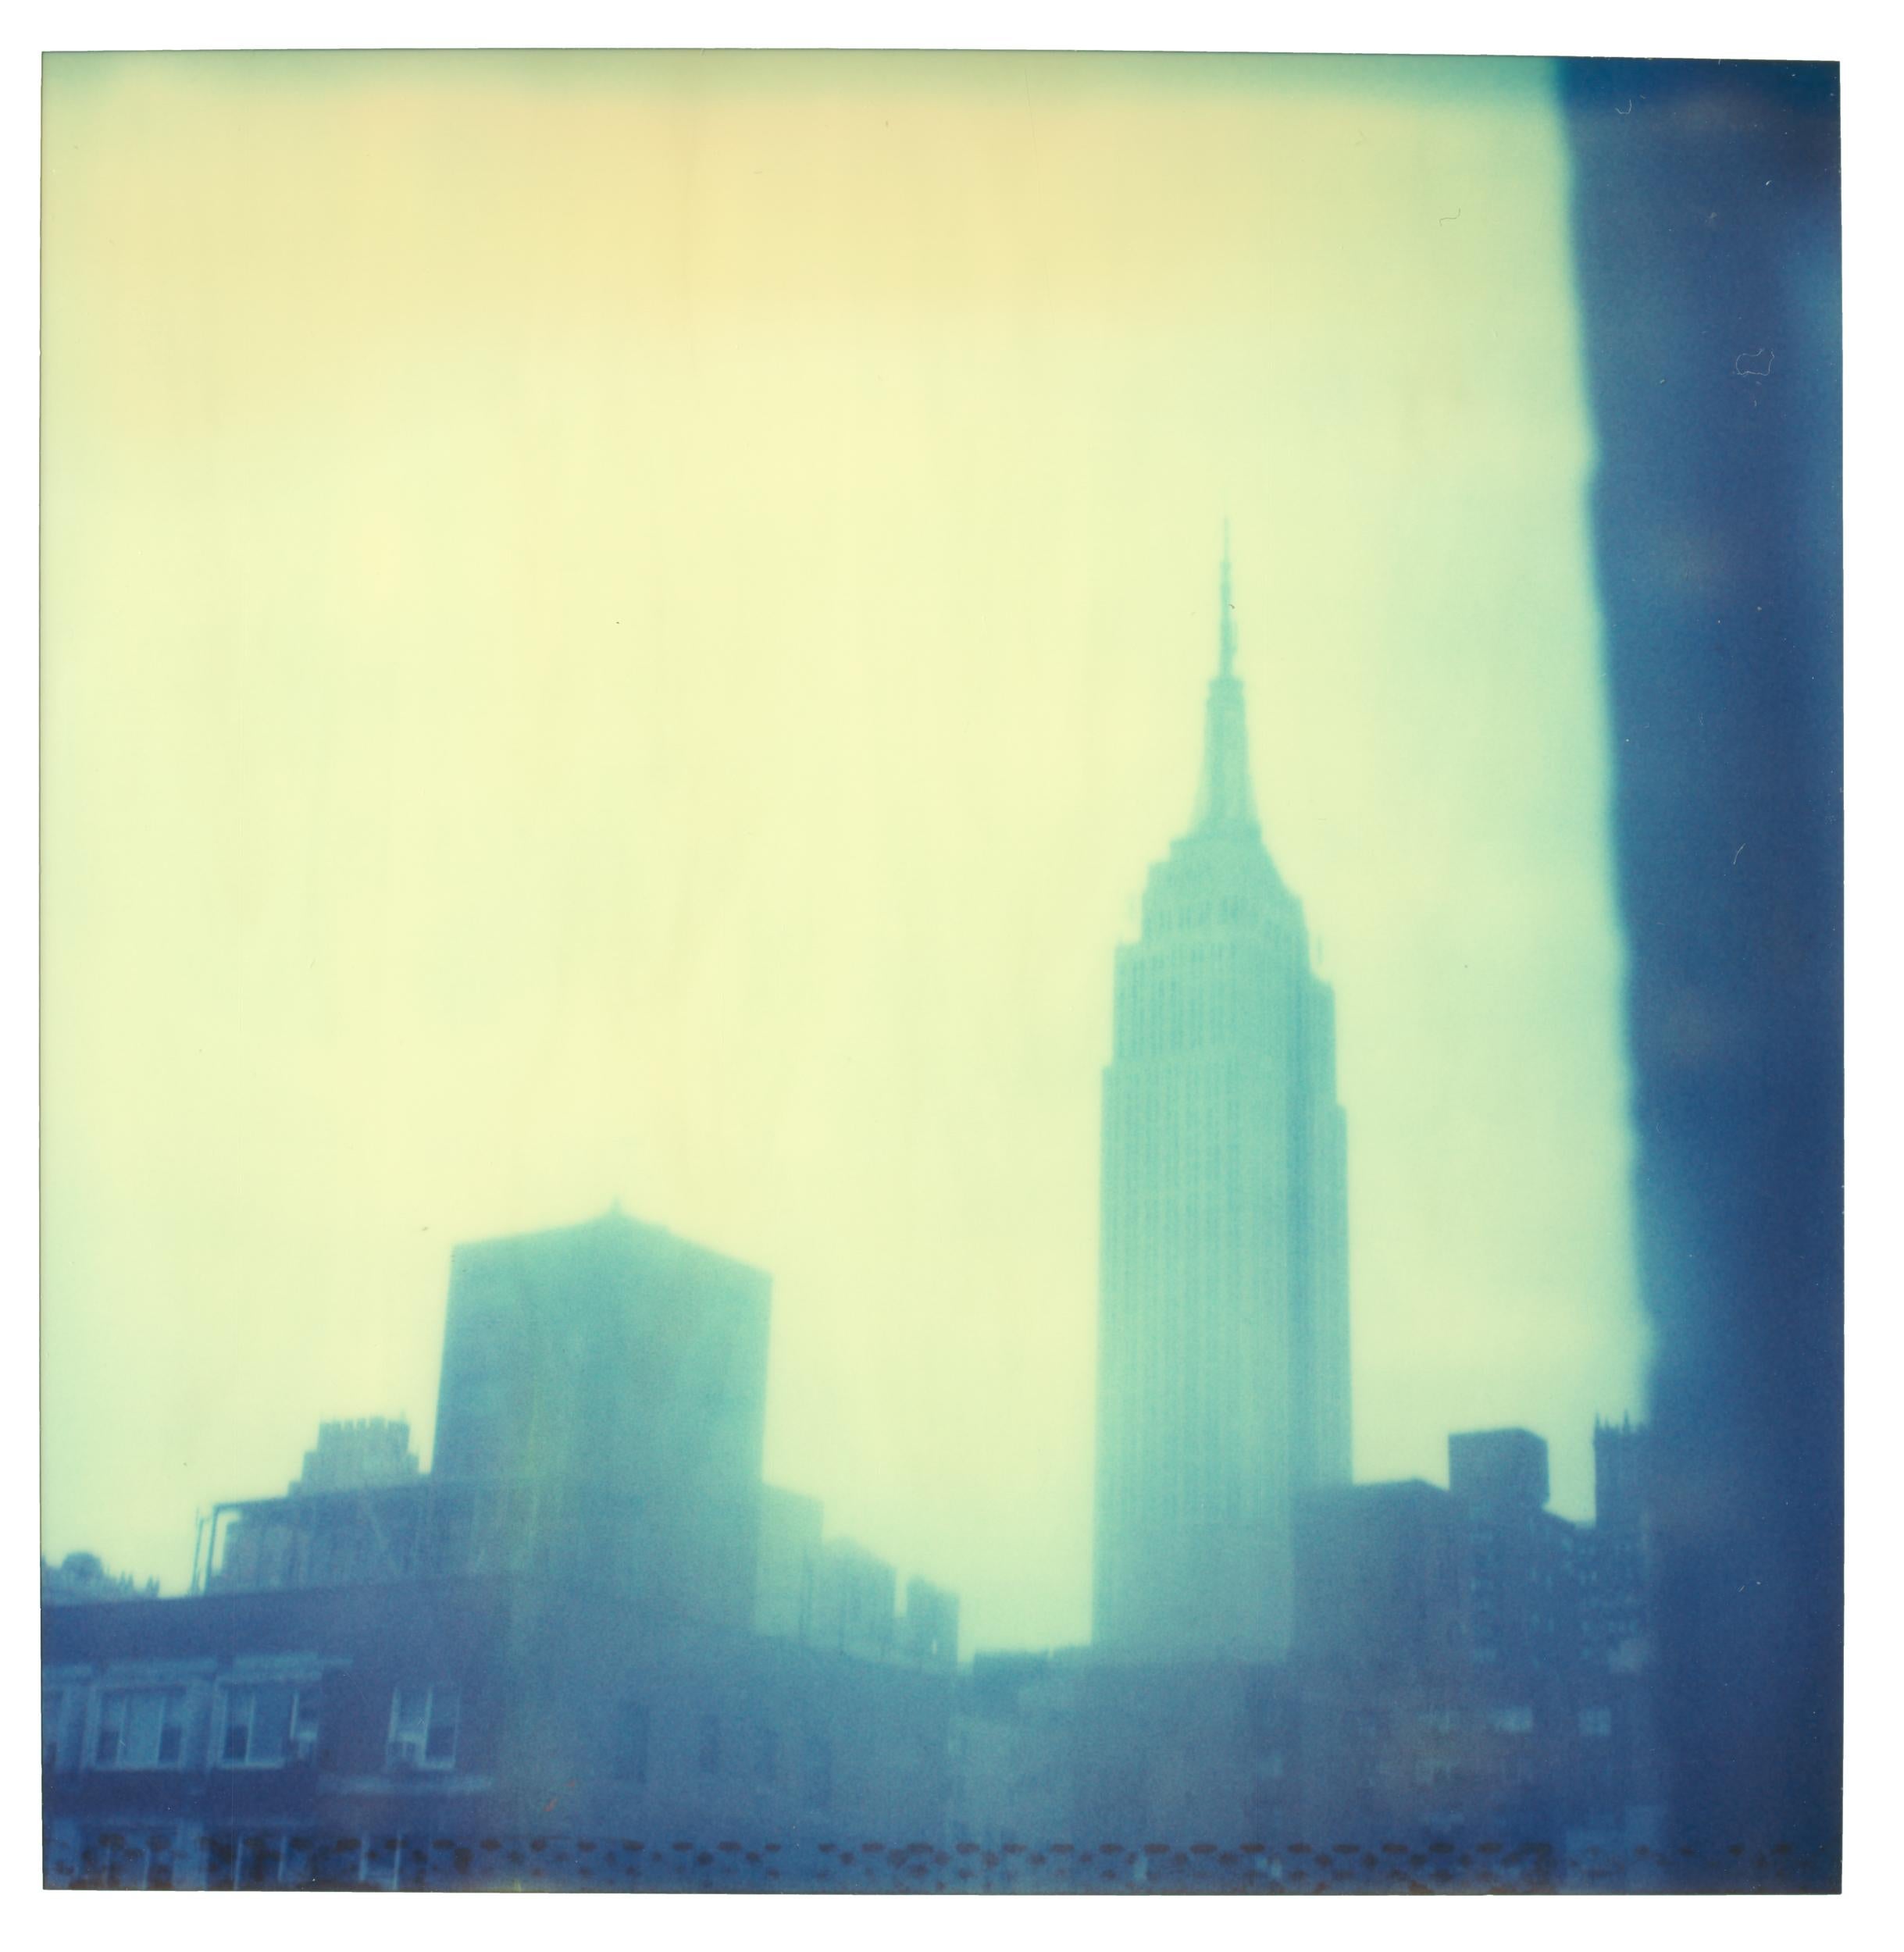 Stefanie Schneider Landscape Photograph - Empire Morning Fog (Strange Love) - Polaroid, New York, Empire State Building